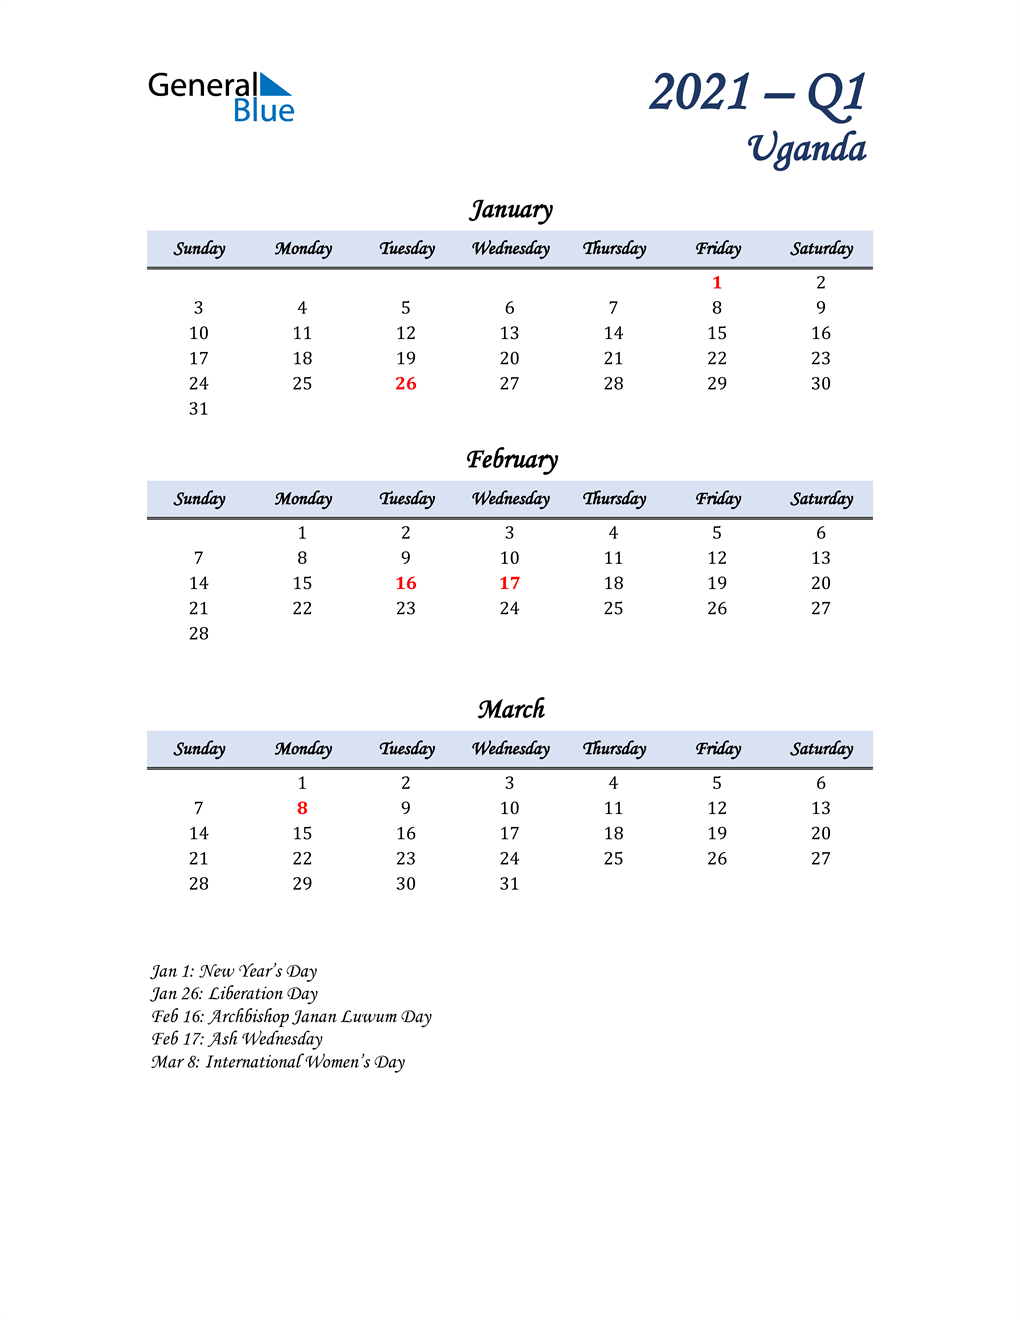  January, February, and March Calendar for Uganda